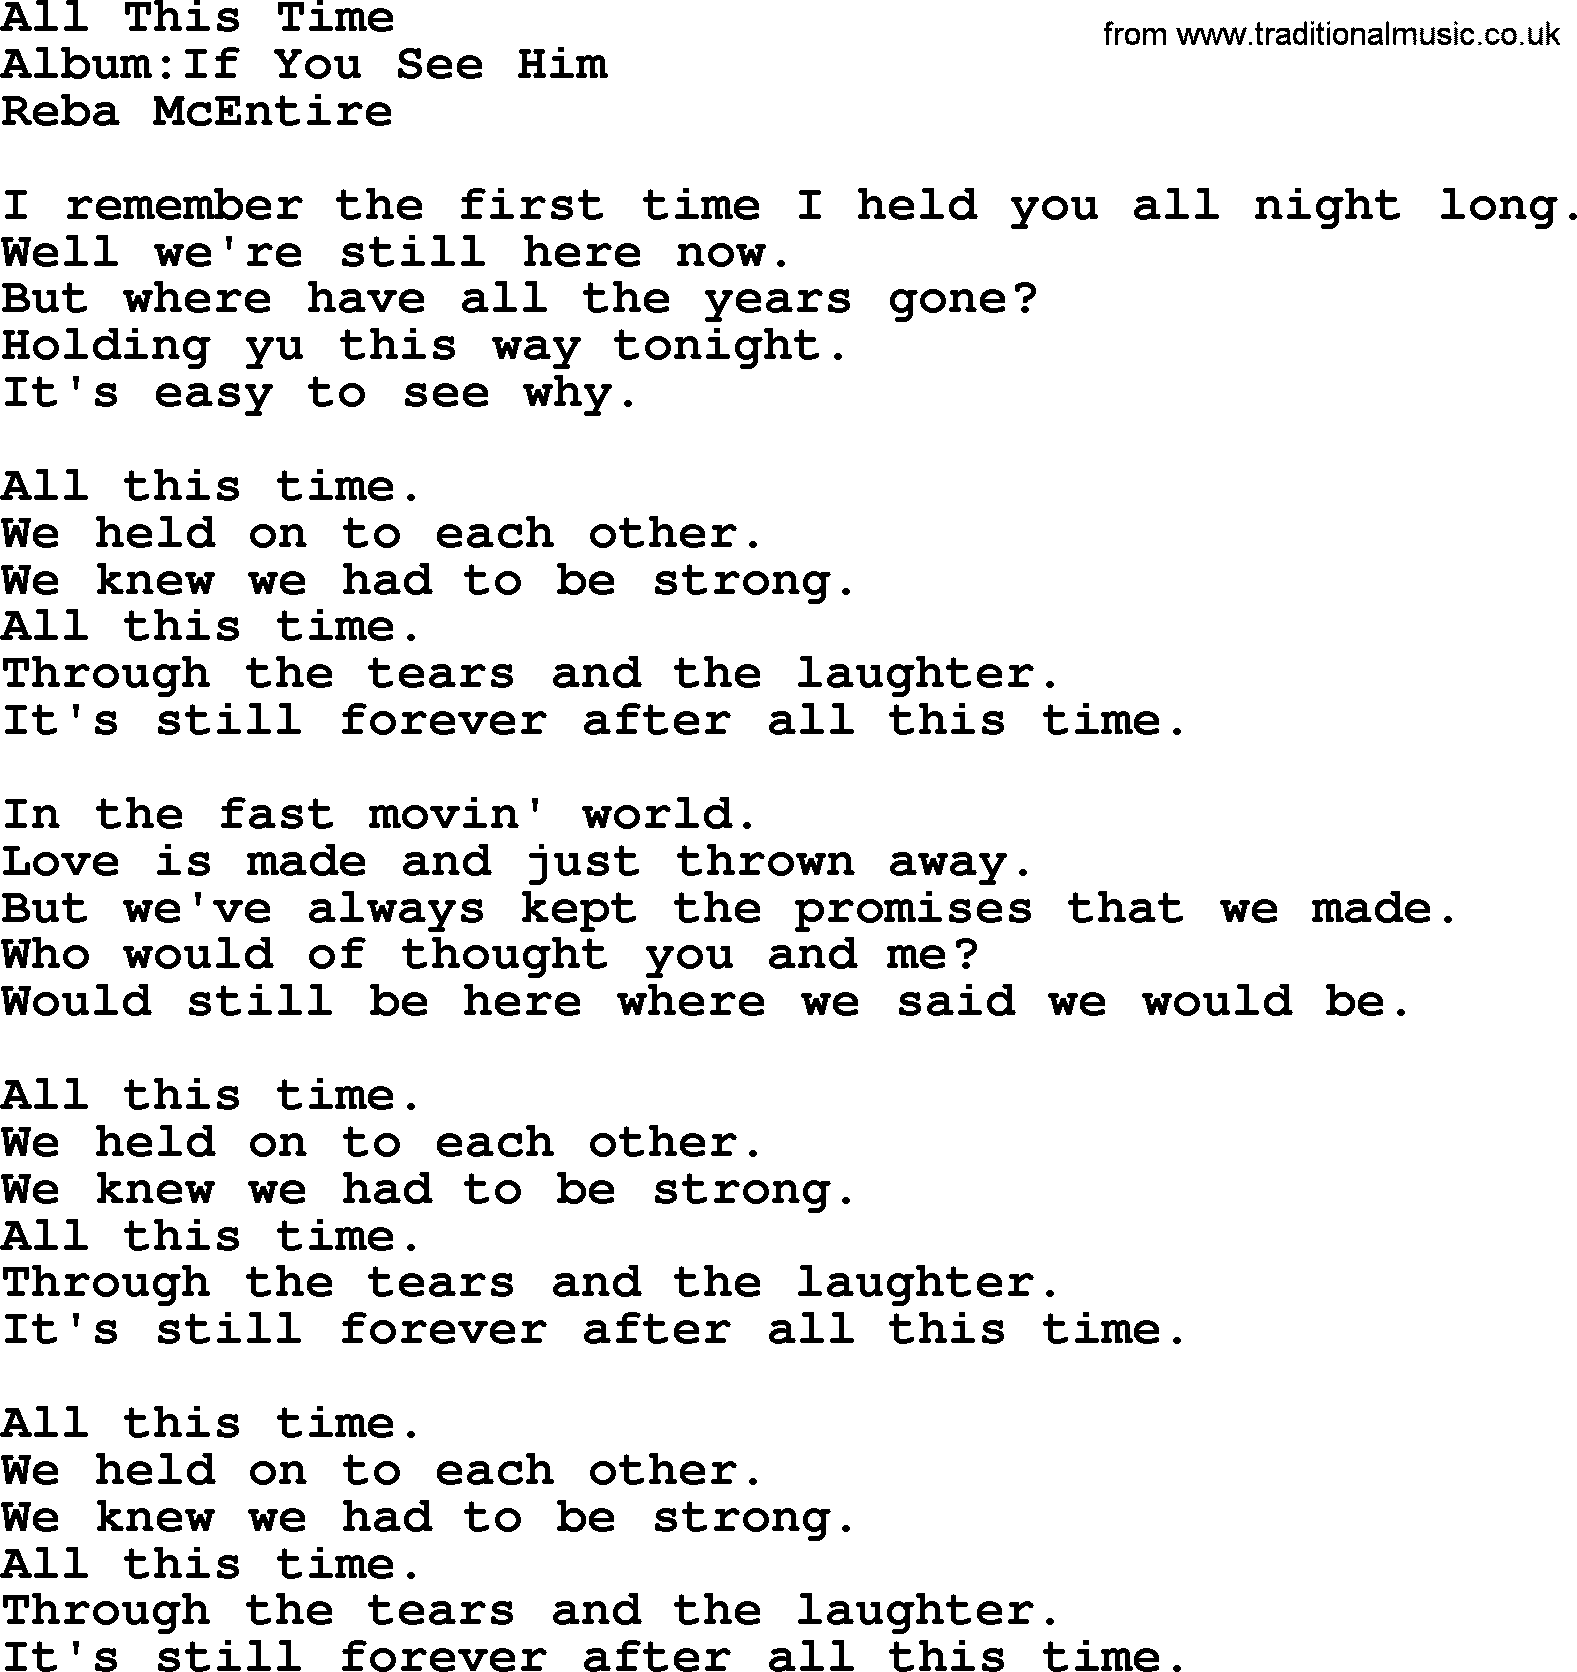 Reba McEntire song: All This Time lyrics